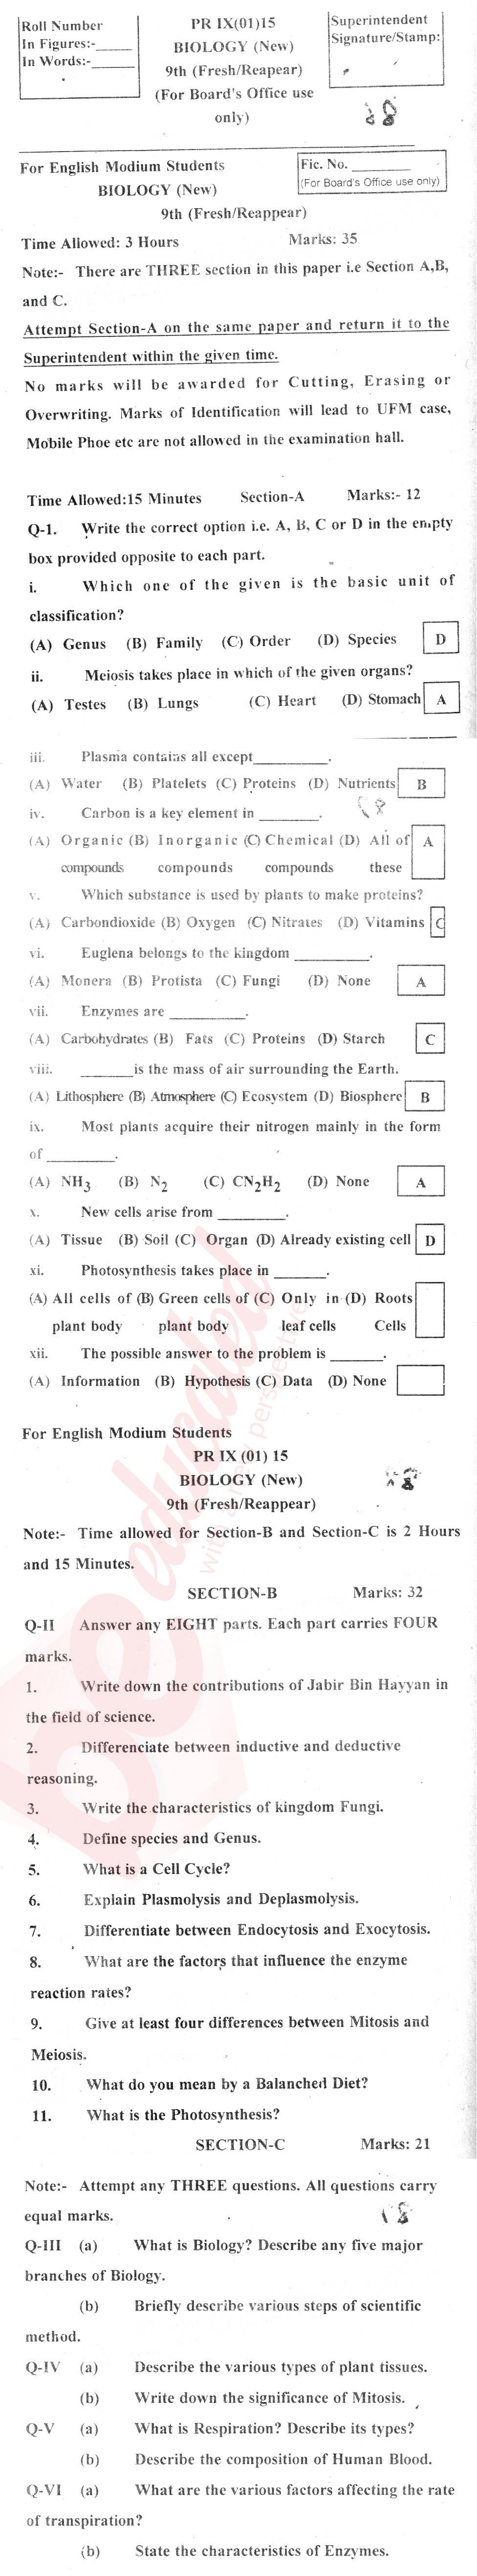 Biology 9th English Medium Past Paper Group 1 BISE Malakand 2015